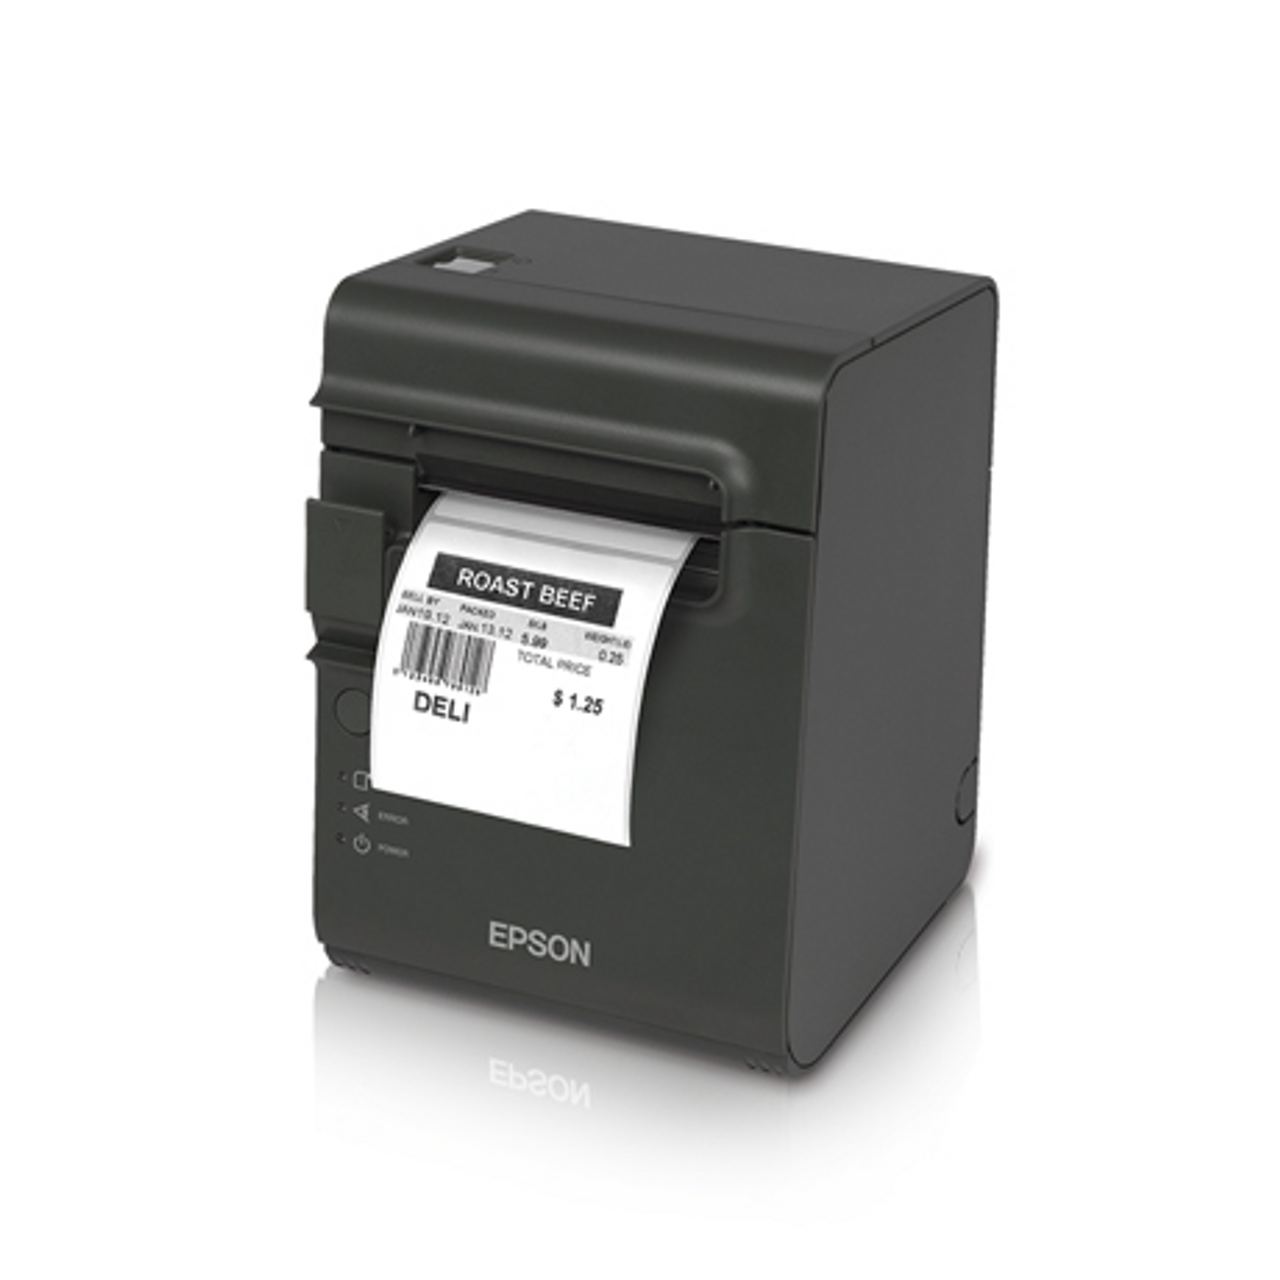 Epson TM-L90 Plus Label and Barcode Printer C31C412A7641 